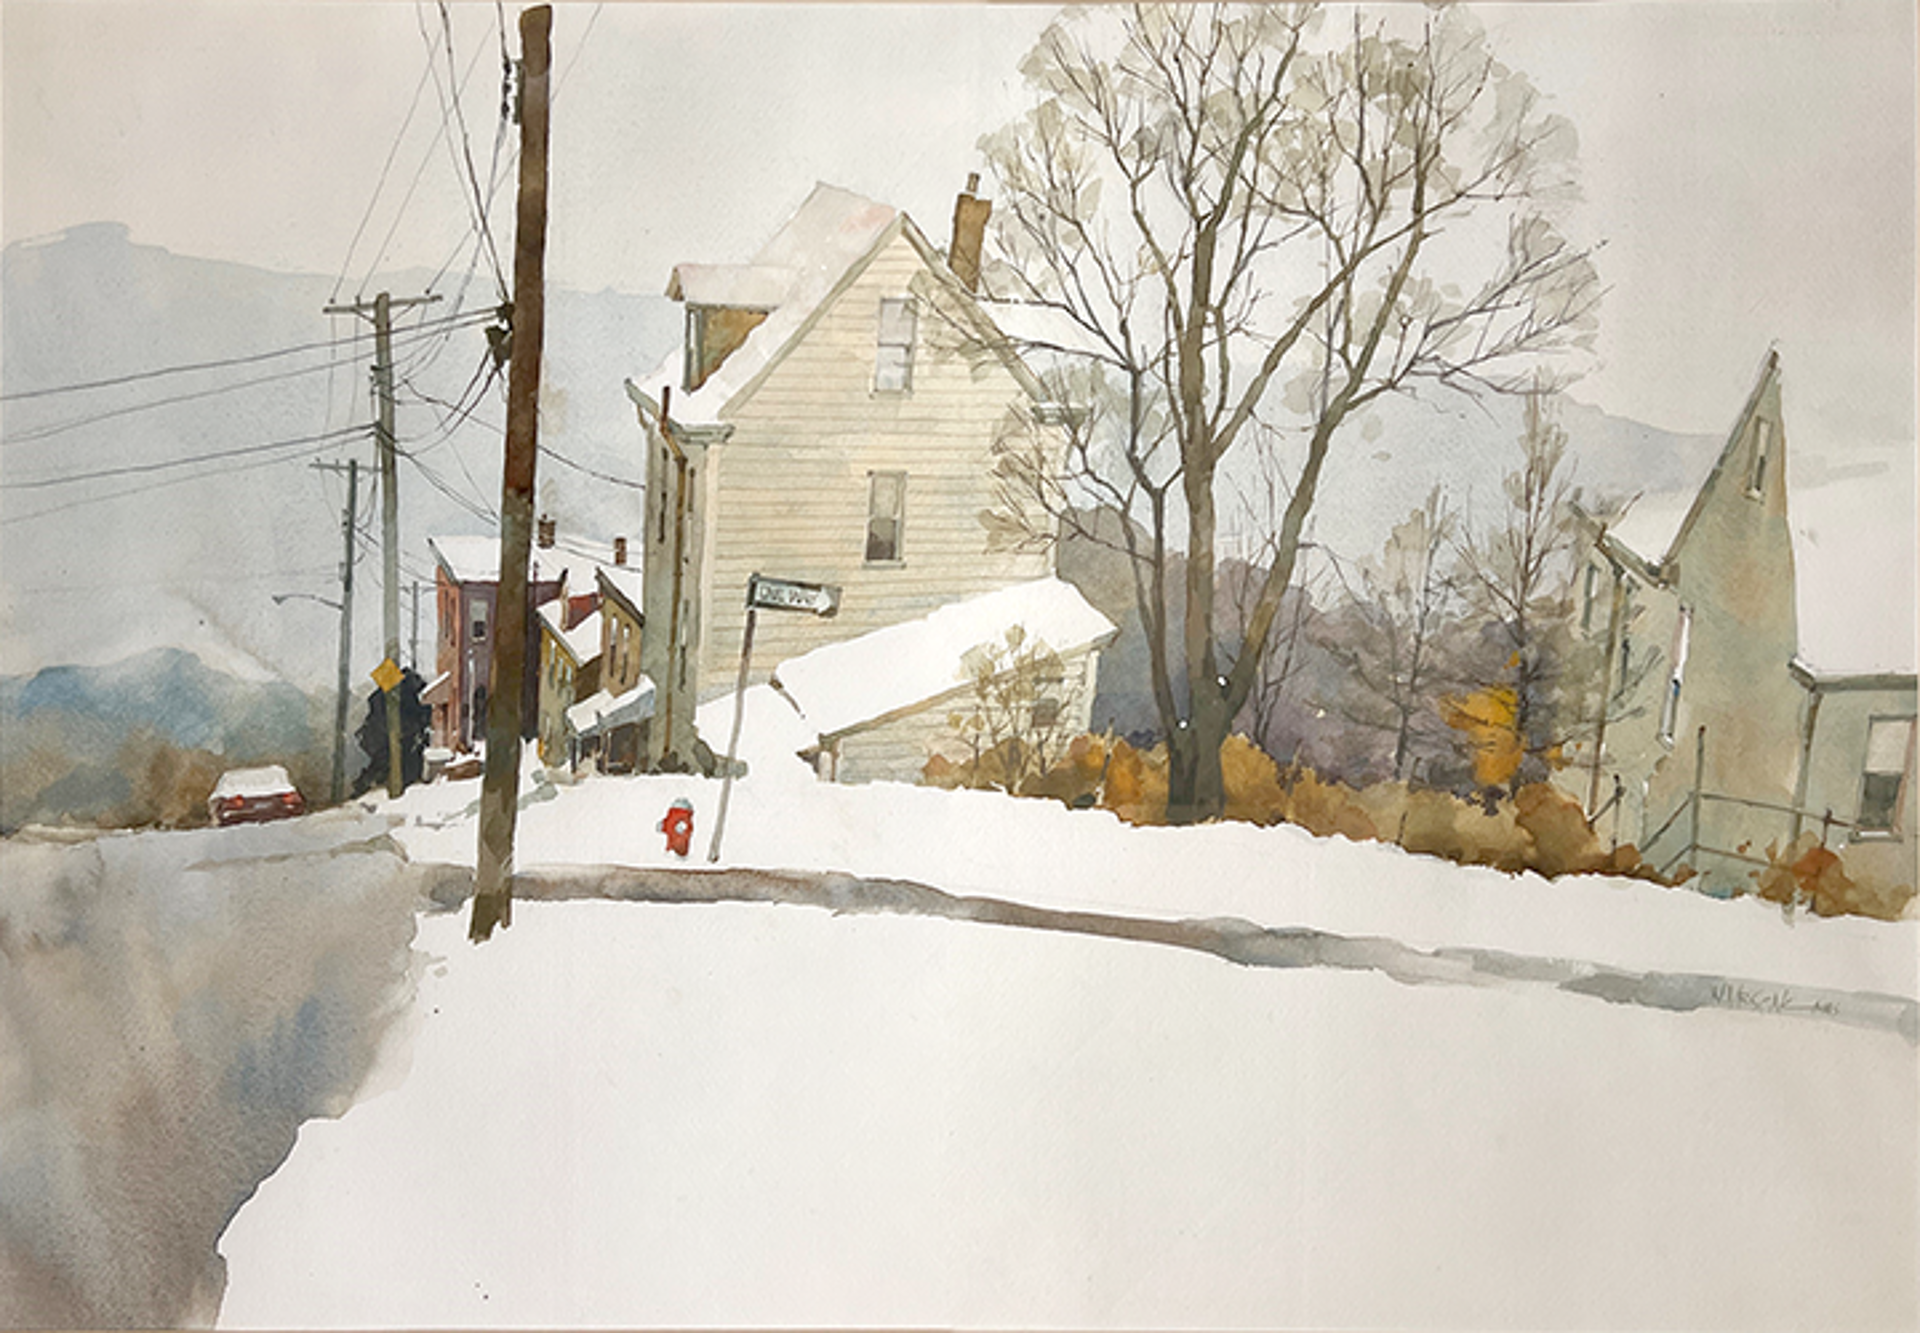 North Hills Winter by Bill Vrscak